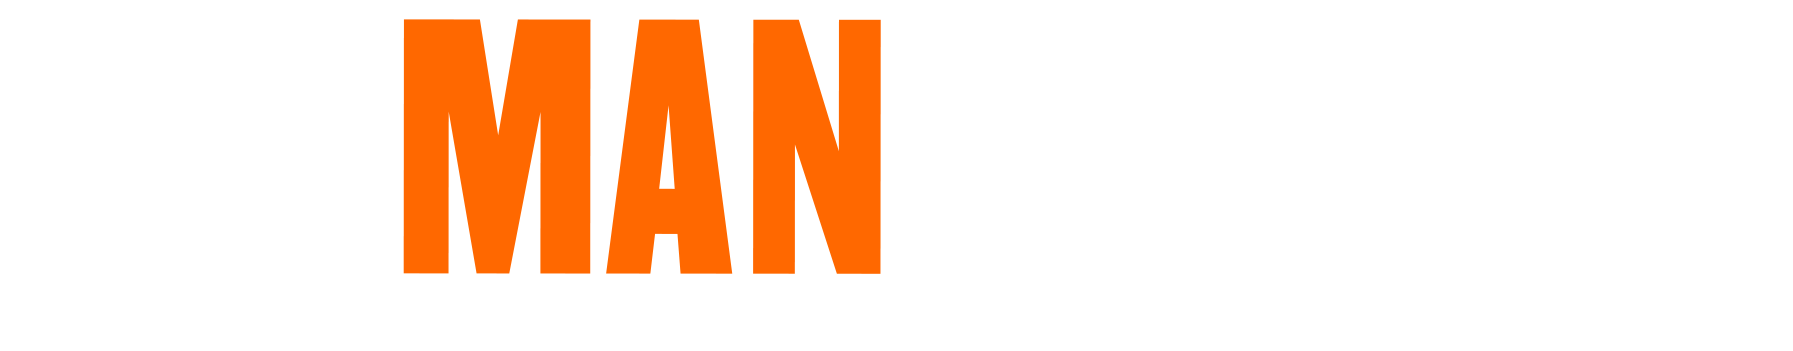 Last Man Standing Fridays - Last Man Standing Fox Logo Png (1800x480)